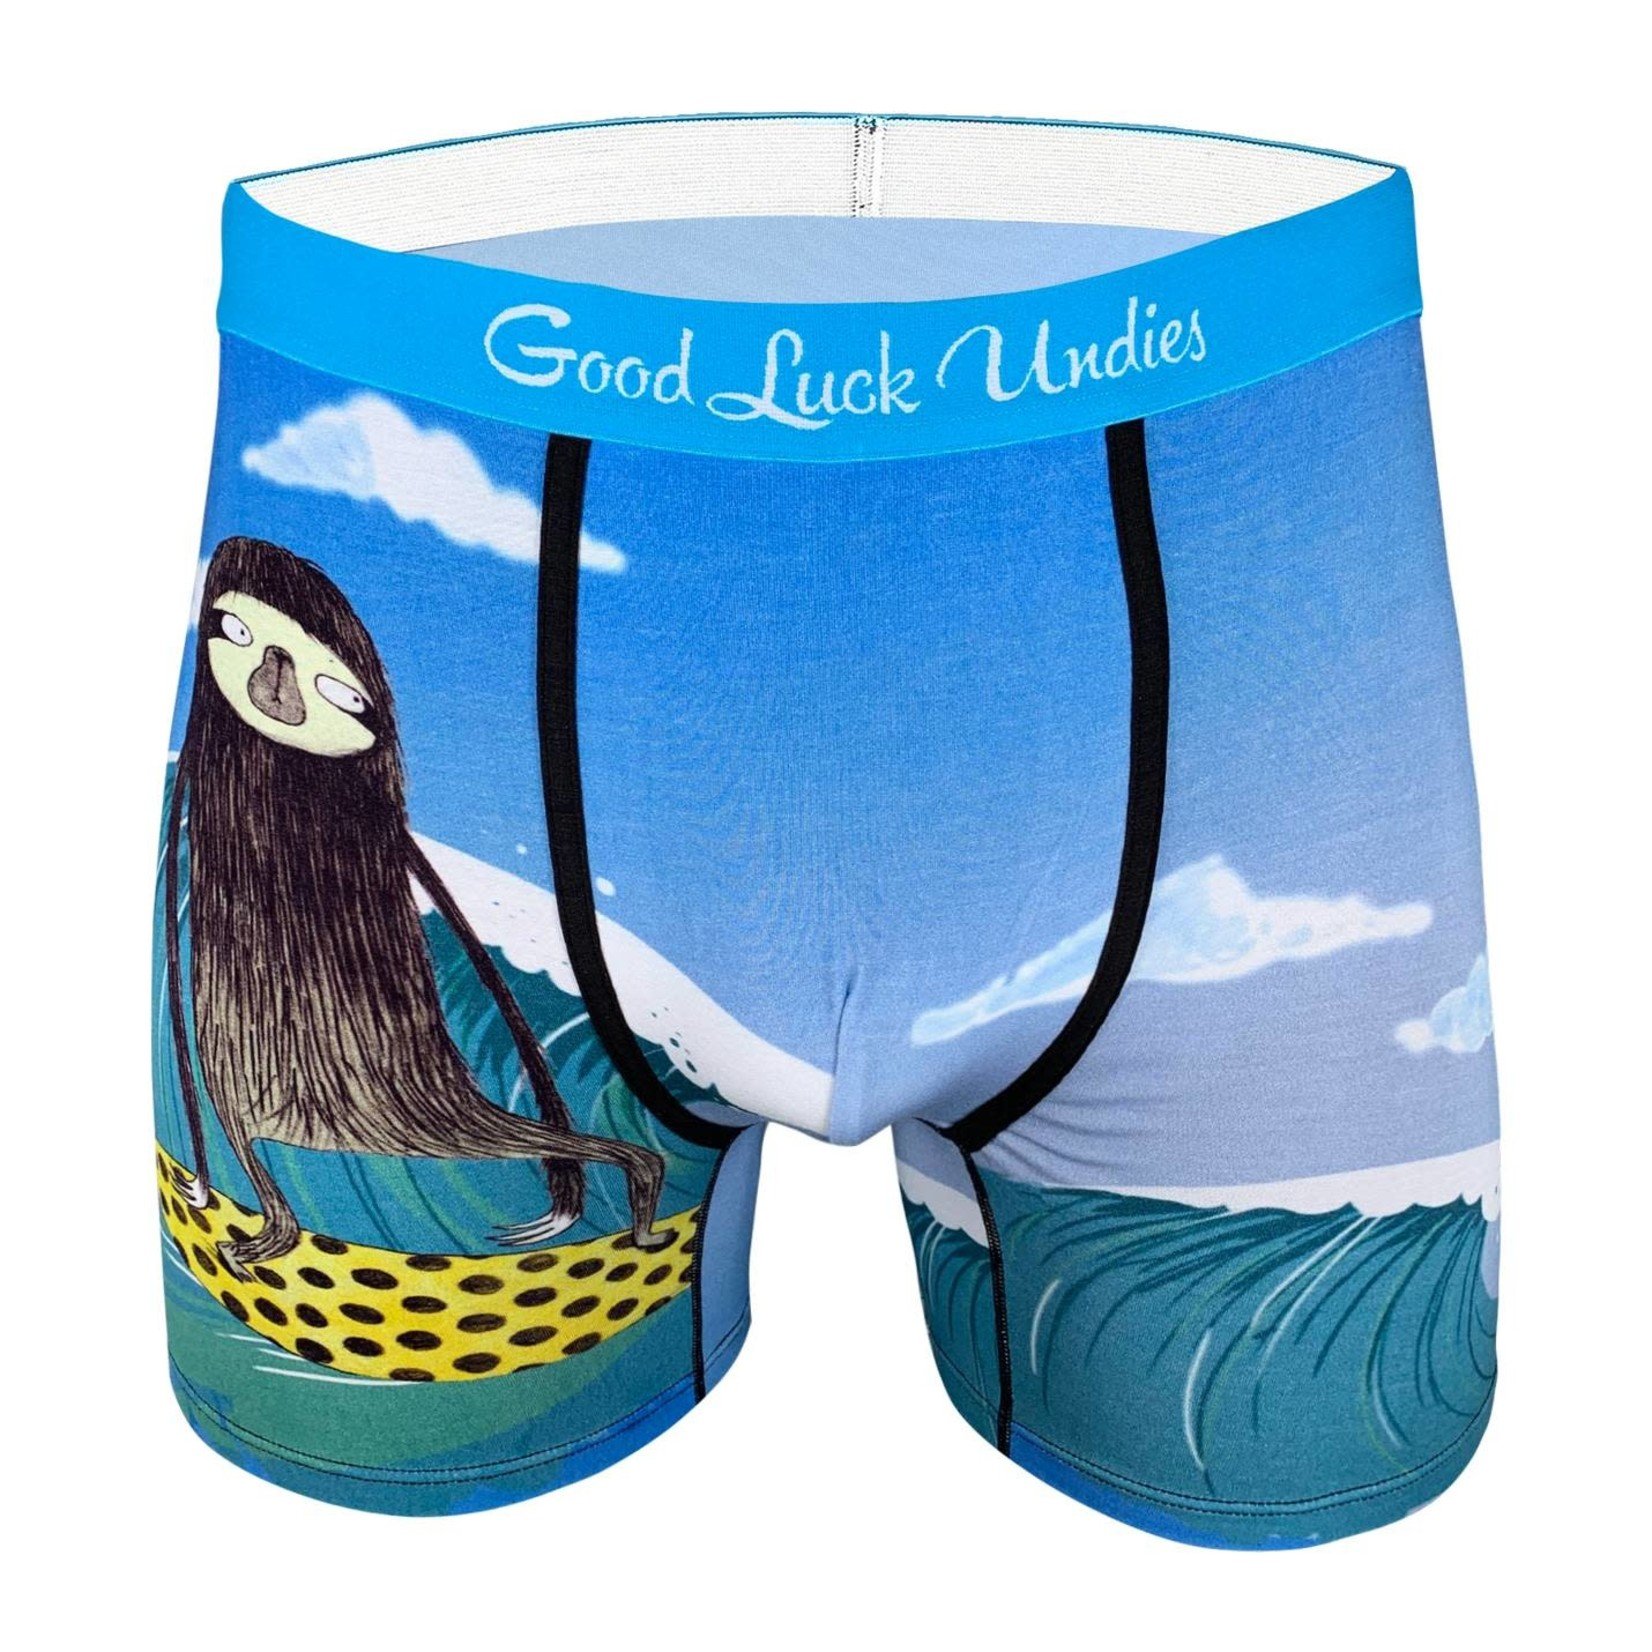 Surfing Sloth Men's Boxer Briefs by Good Luck Undies - The